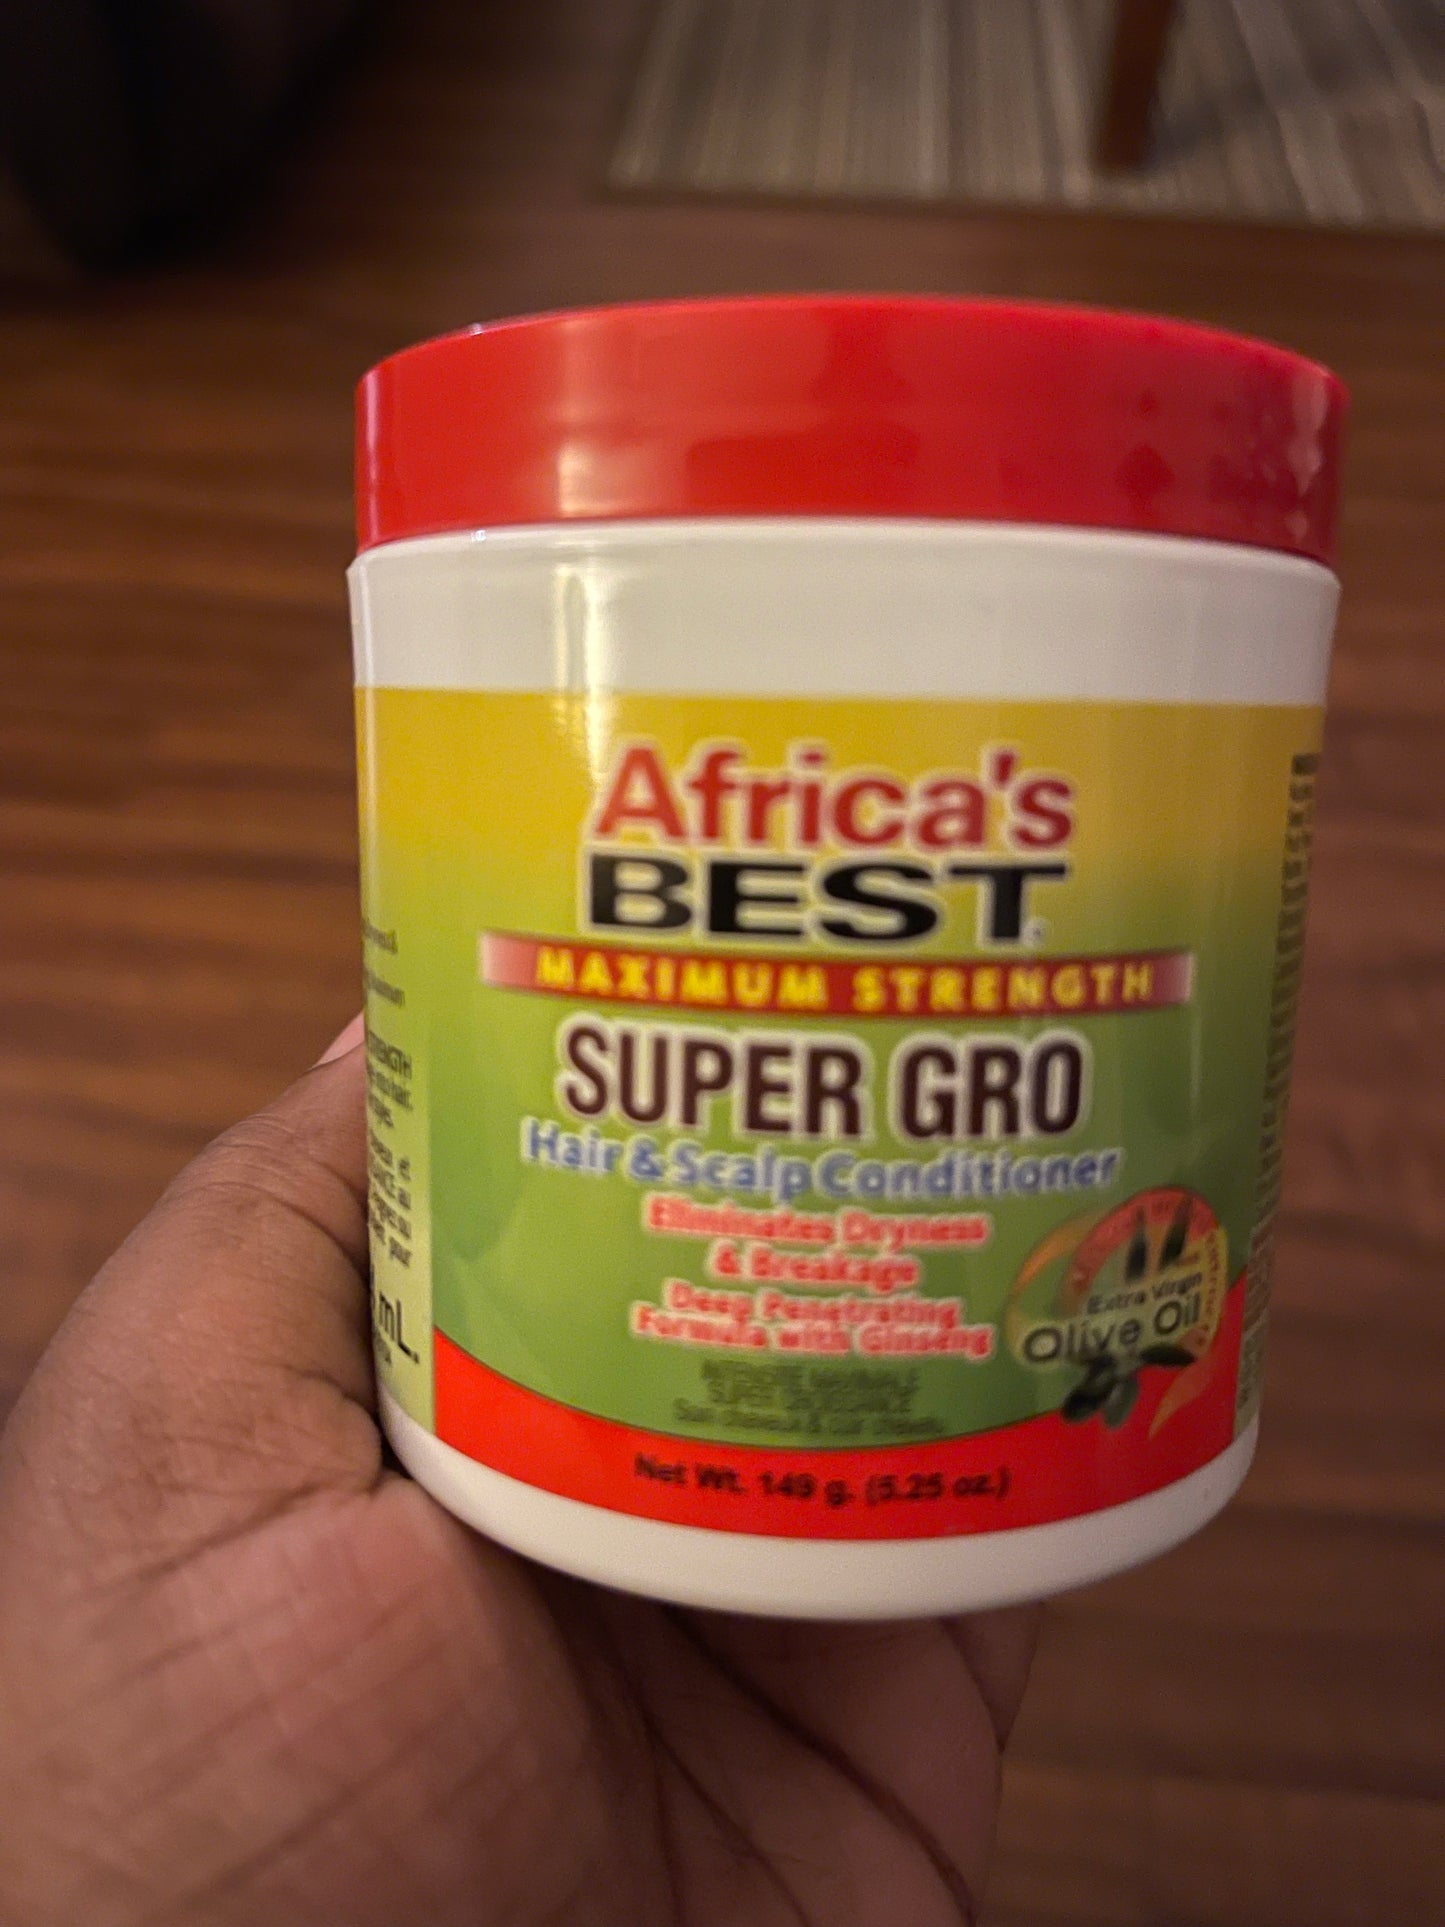 Africa’s Best Max Strength Super Gro Hair & Scalp Conditioner